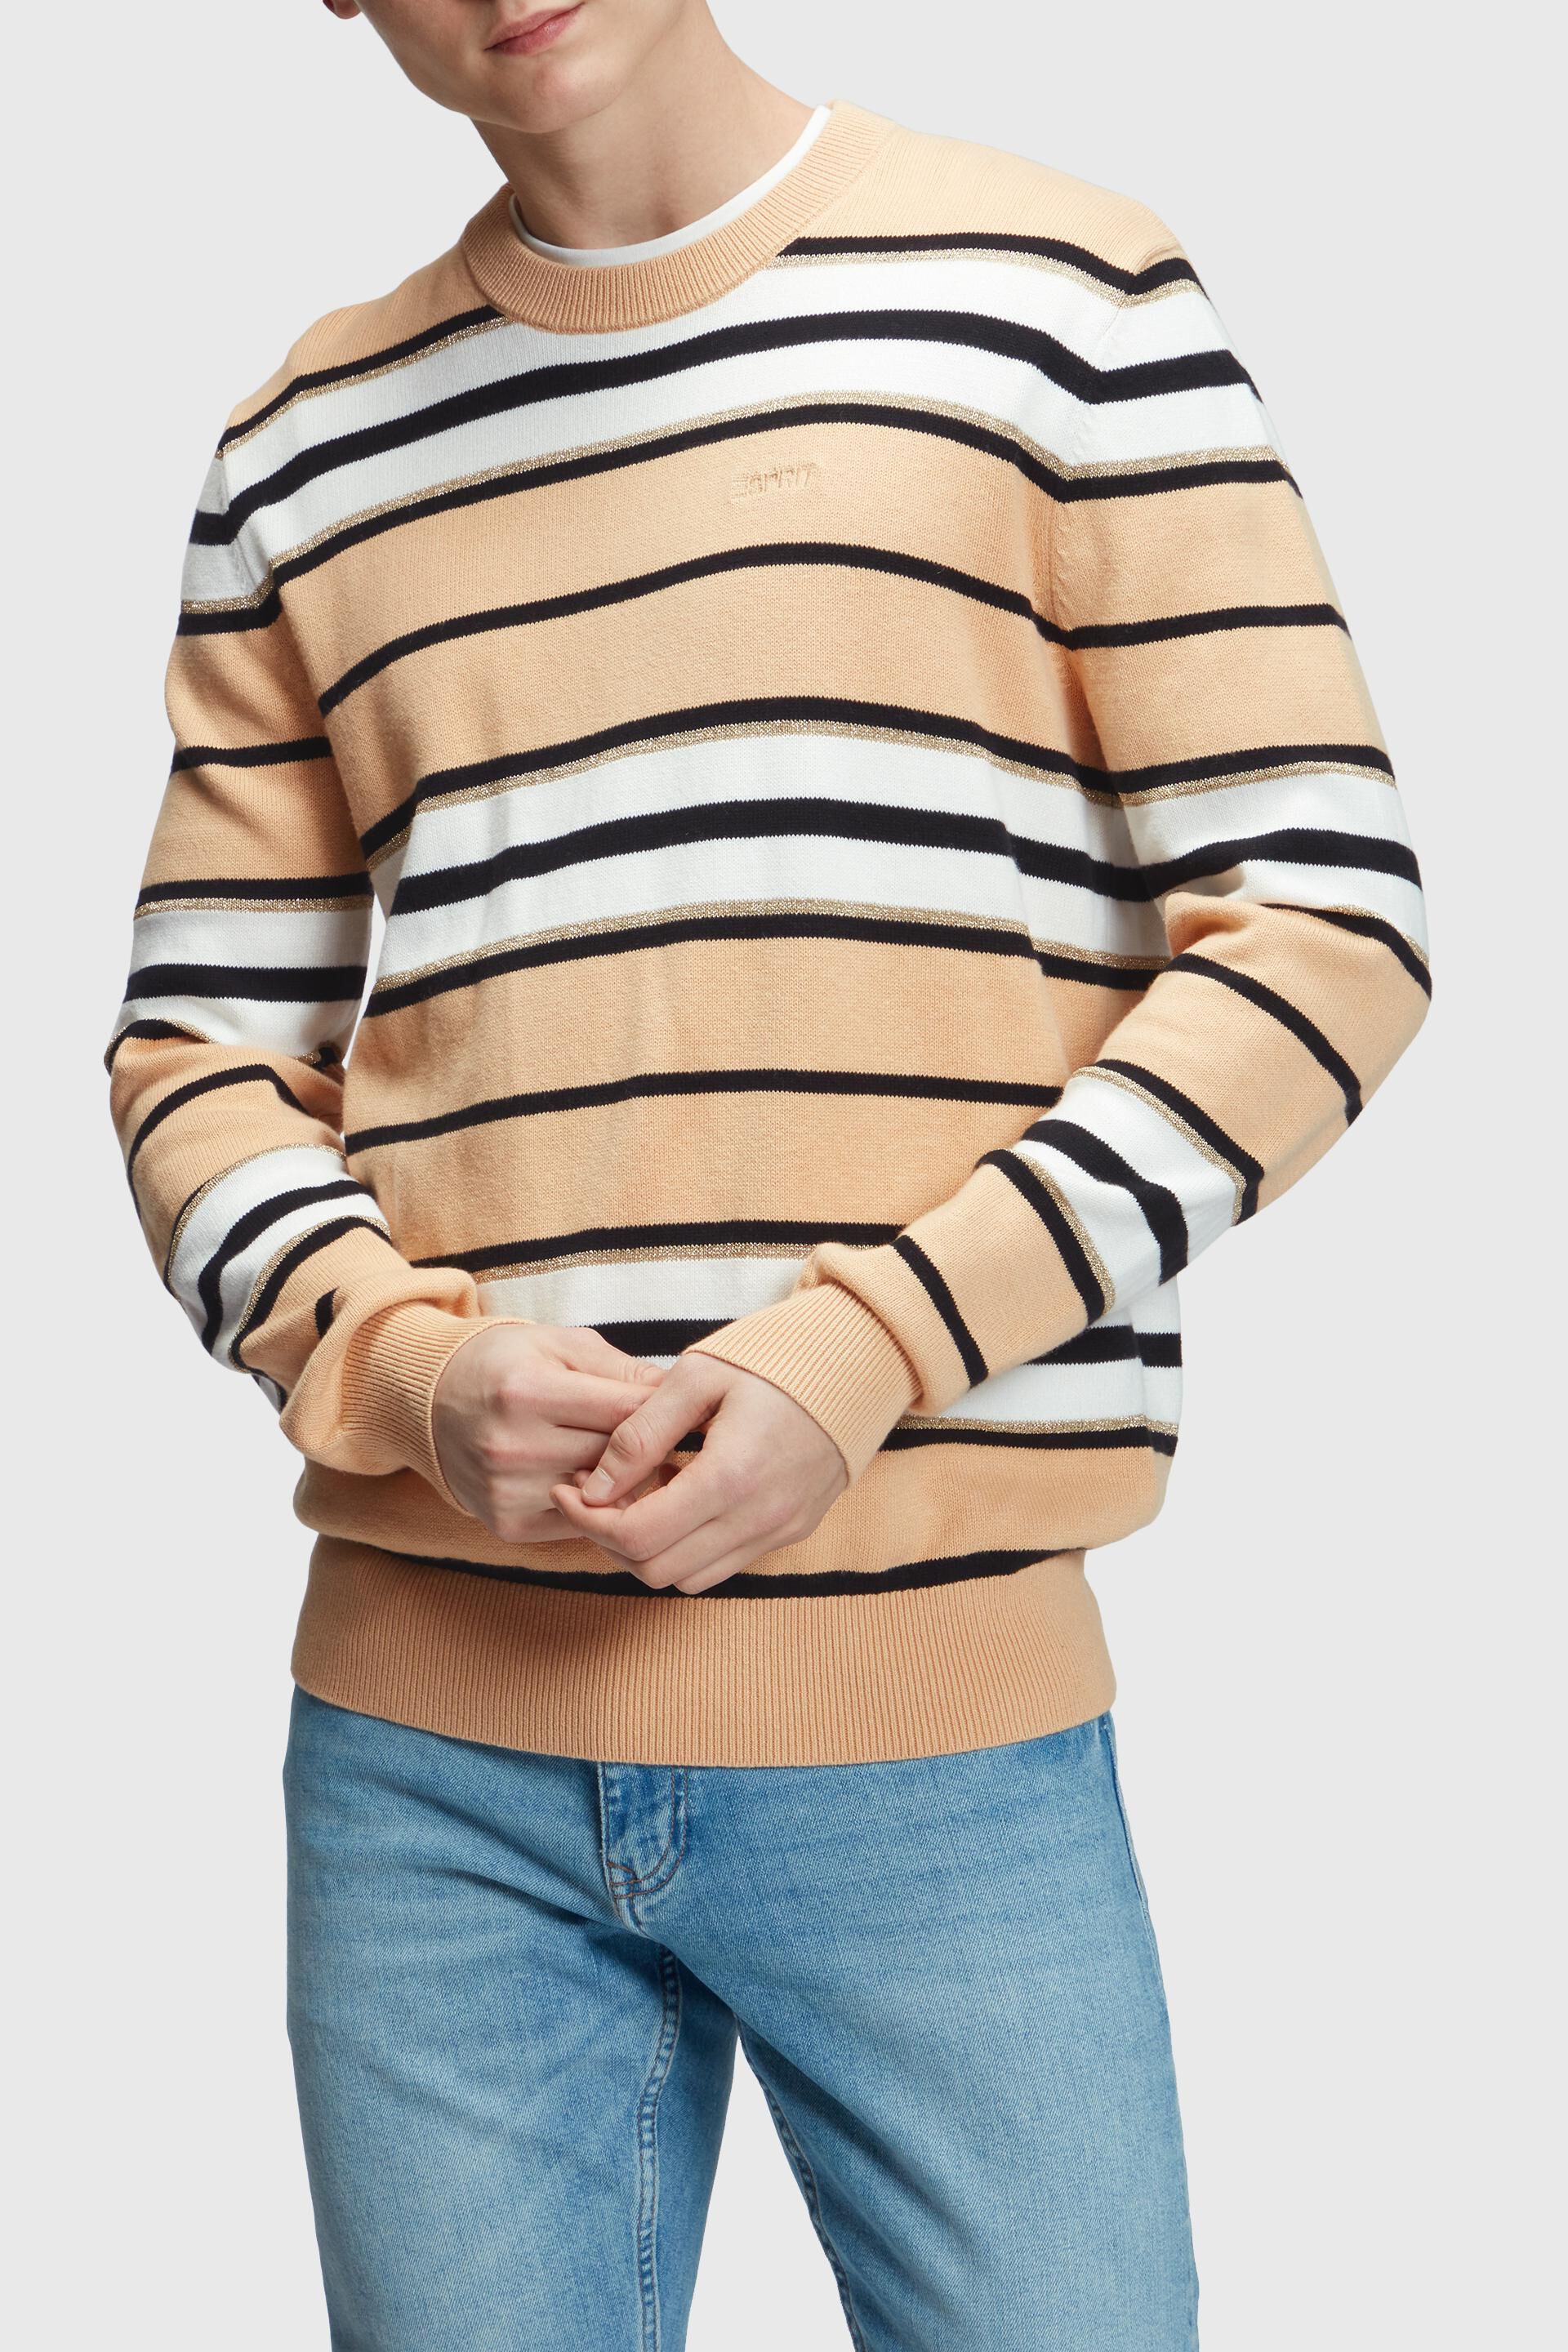 Esprit with Striped cashmere jumper